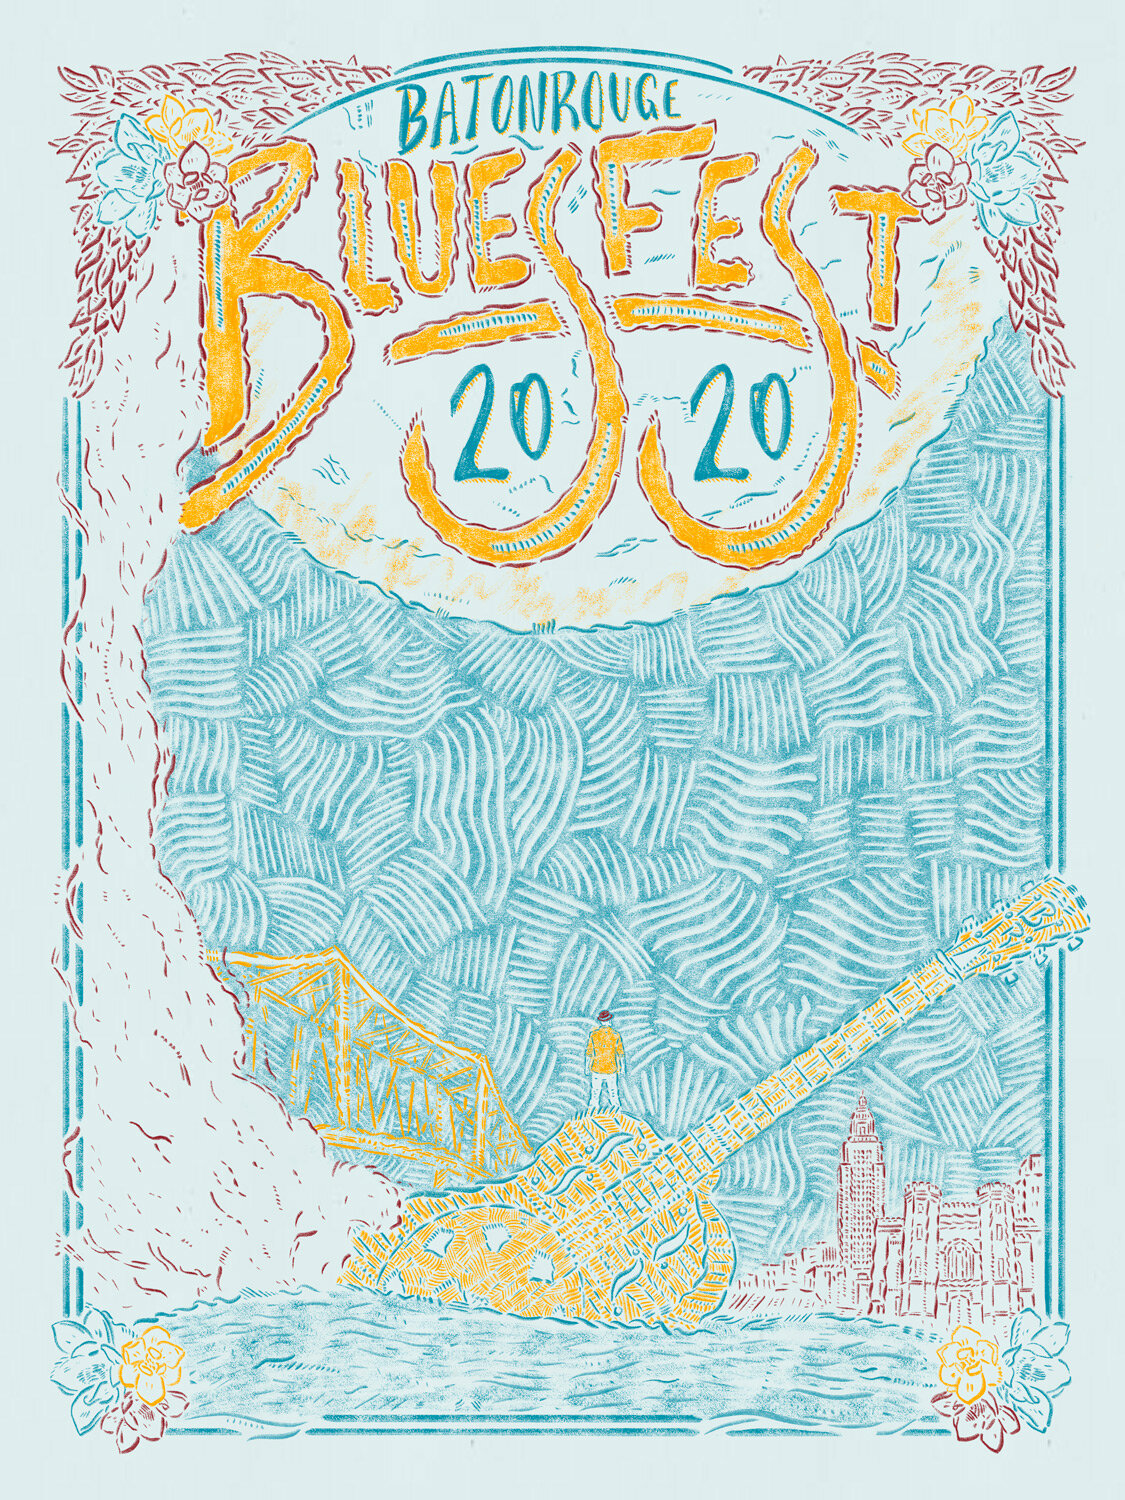 2020 BR Blues Festival Poster by Krist Baton Rouge Blues